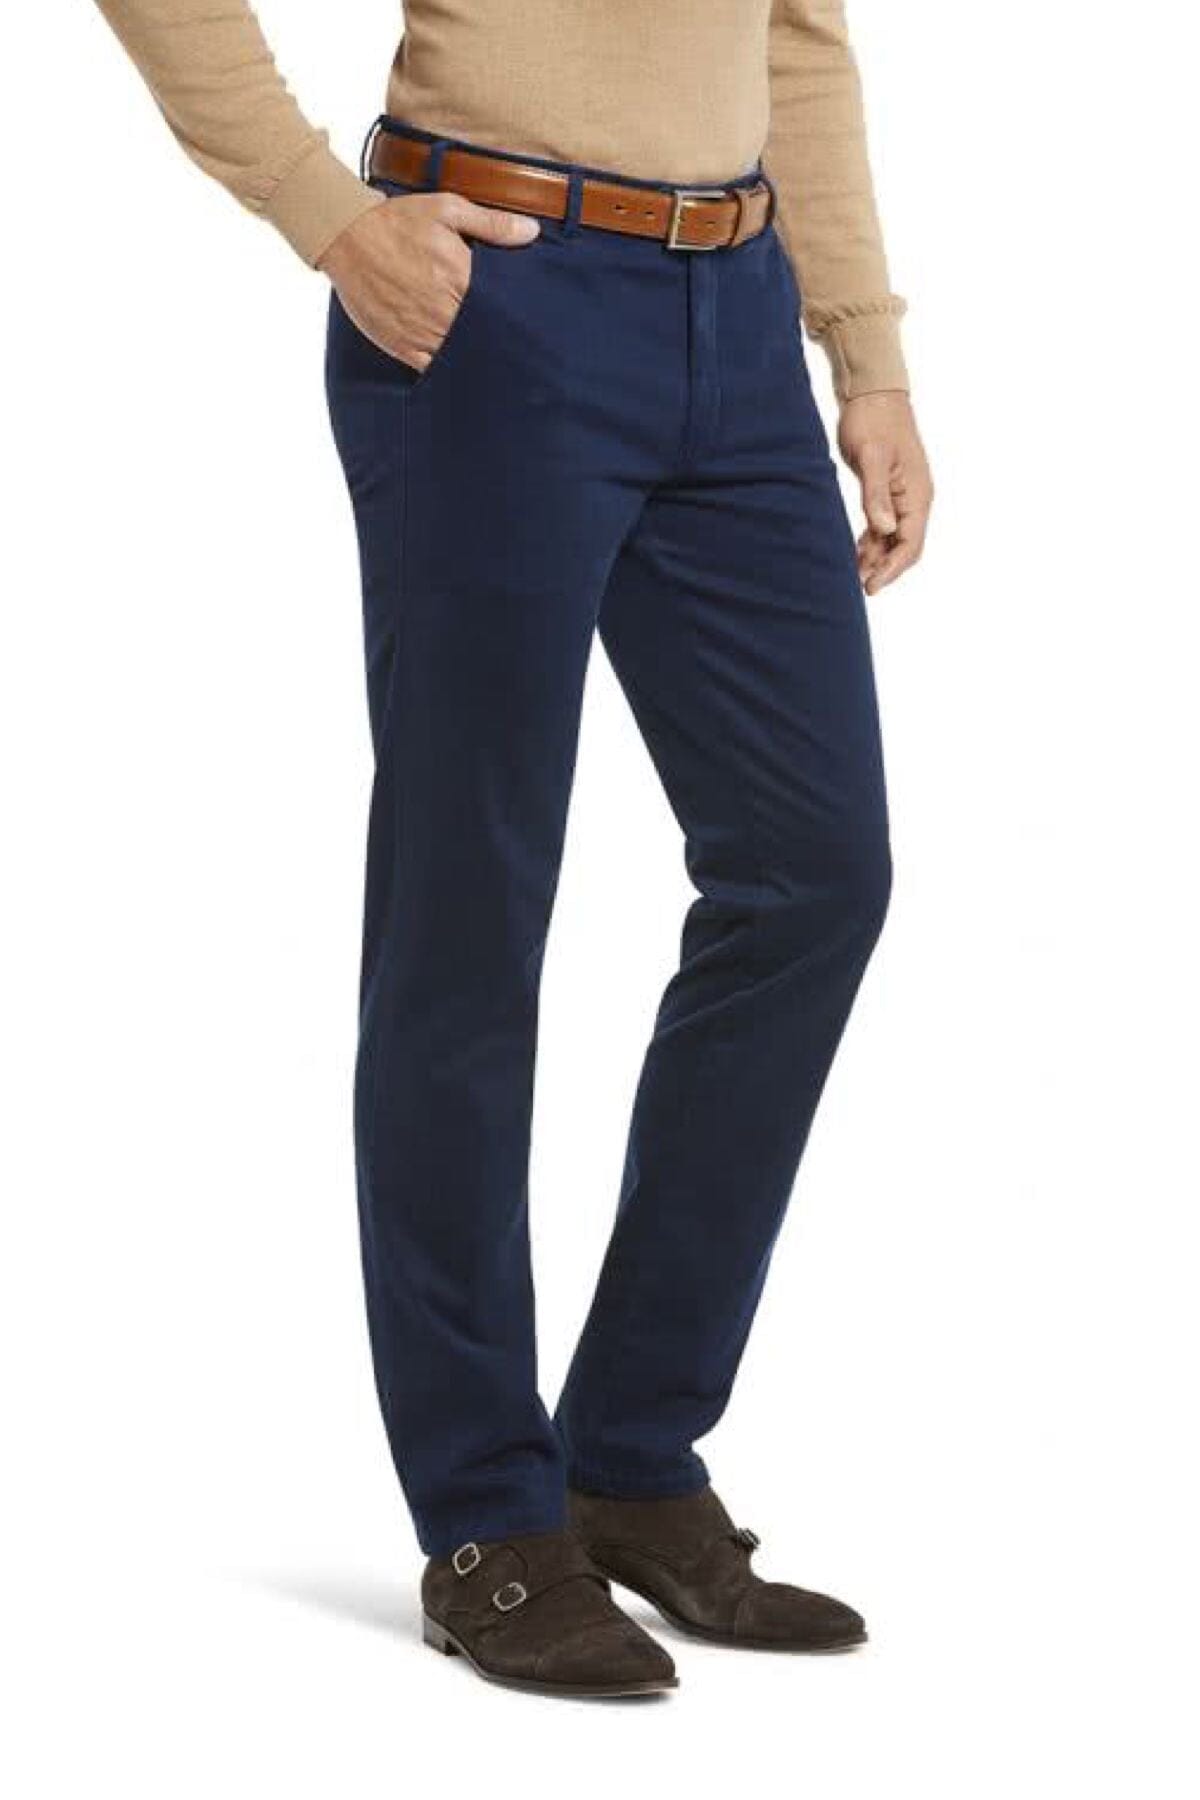 Pantalon de coton bleu Meyer 